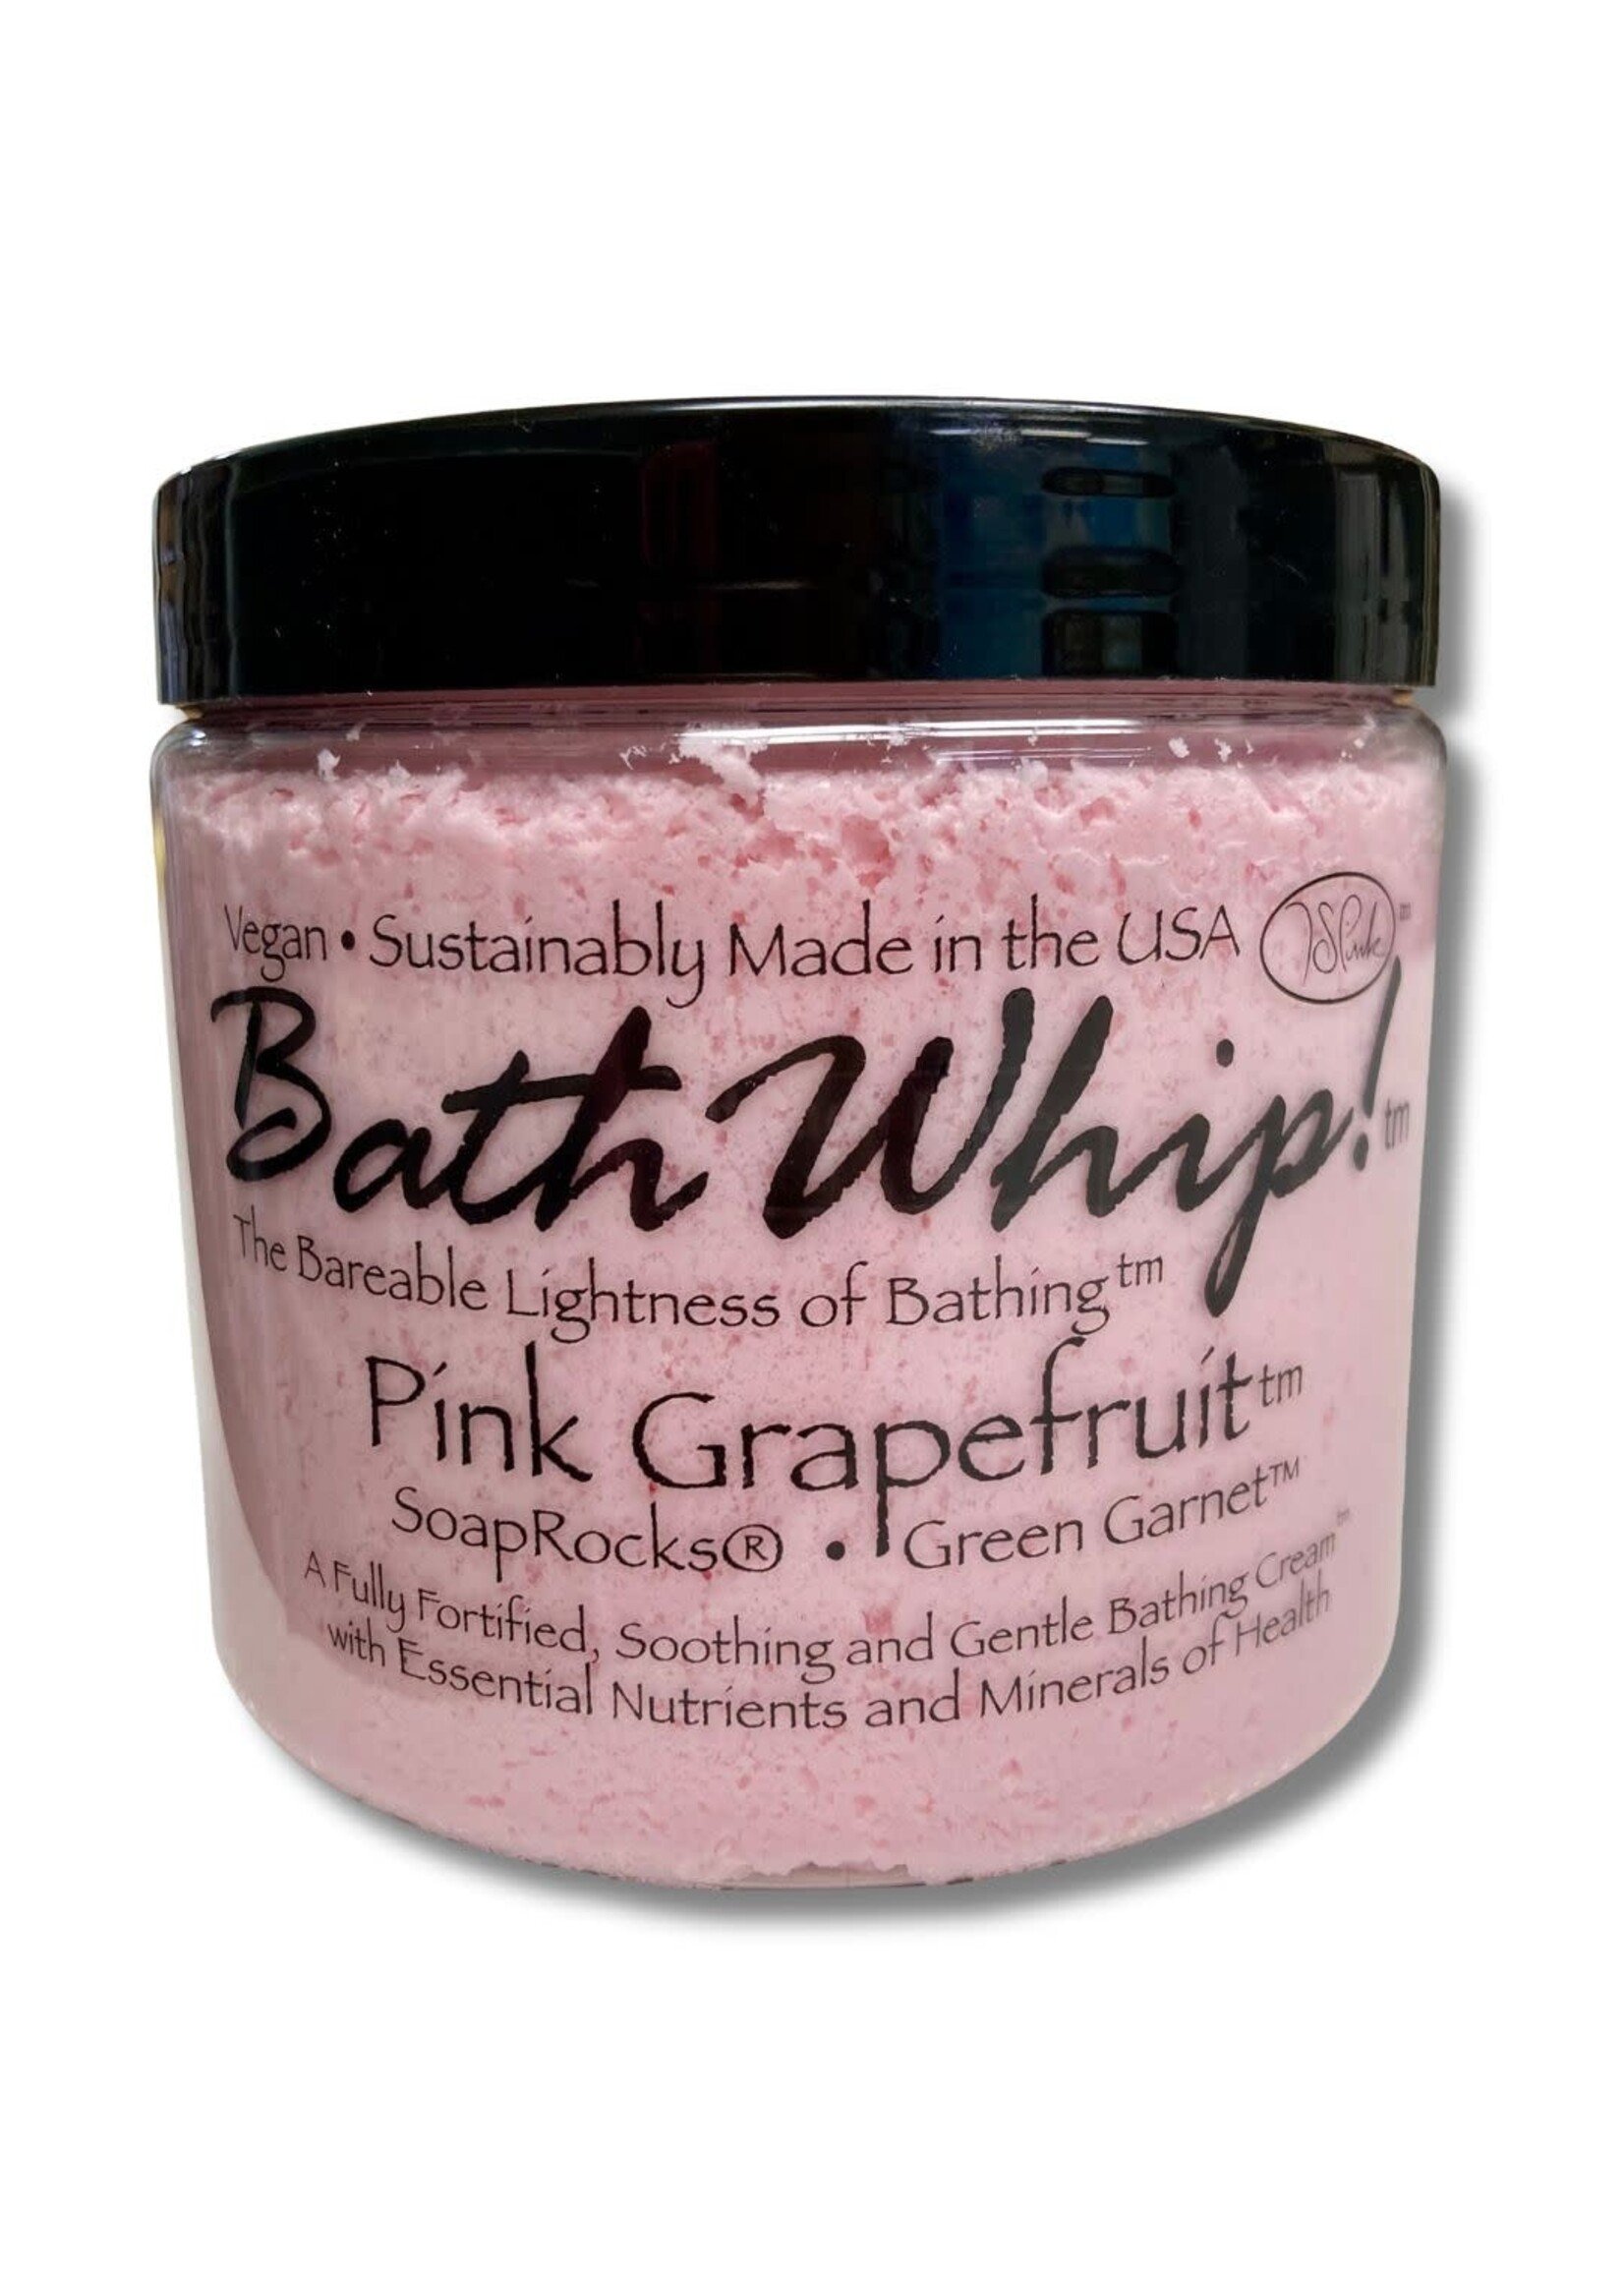 SoapRock Bath Whip